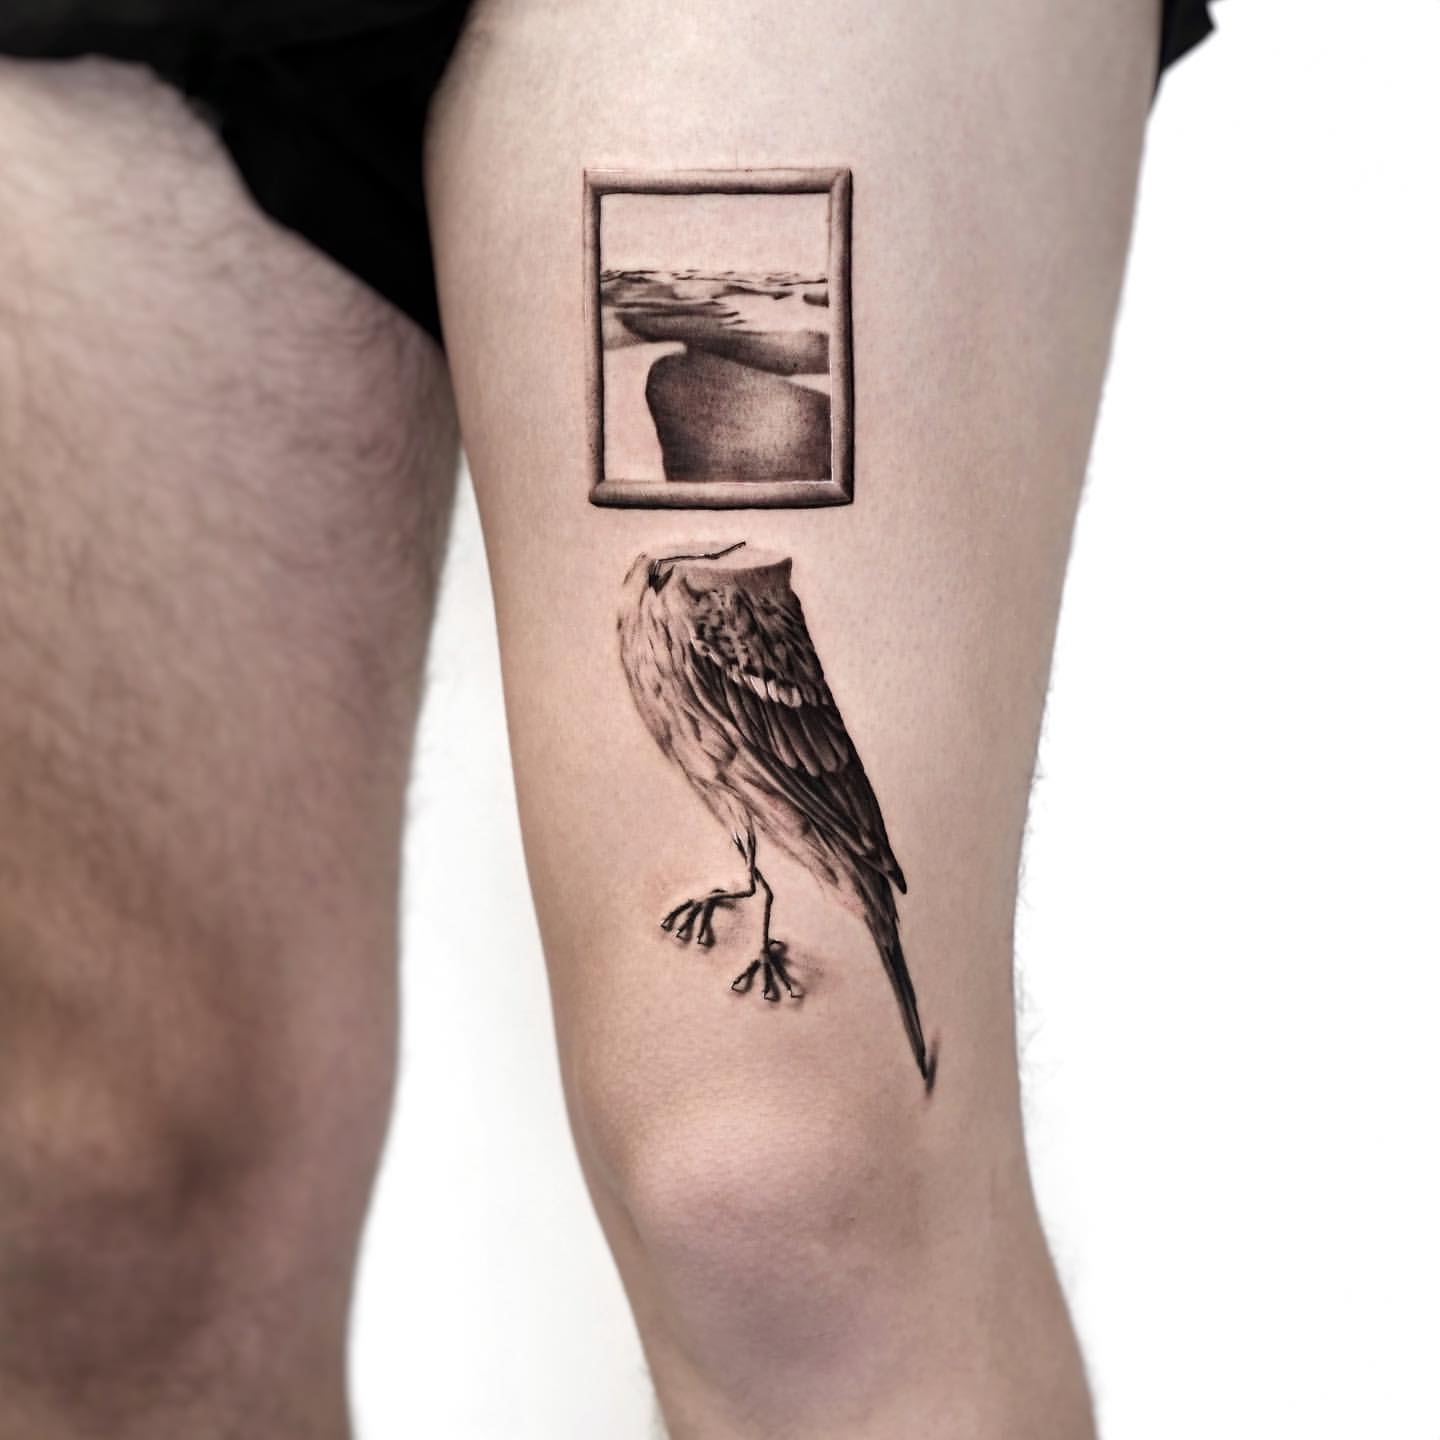 Pin by Jkkahlon on Tattoos | Hip thigh tattoos, Stomach tattoos women, Leg  tattoos women